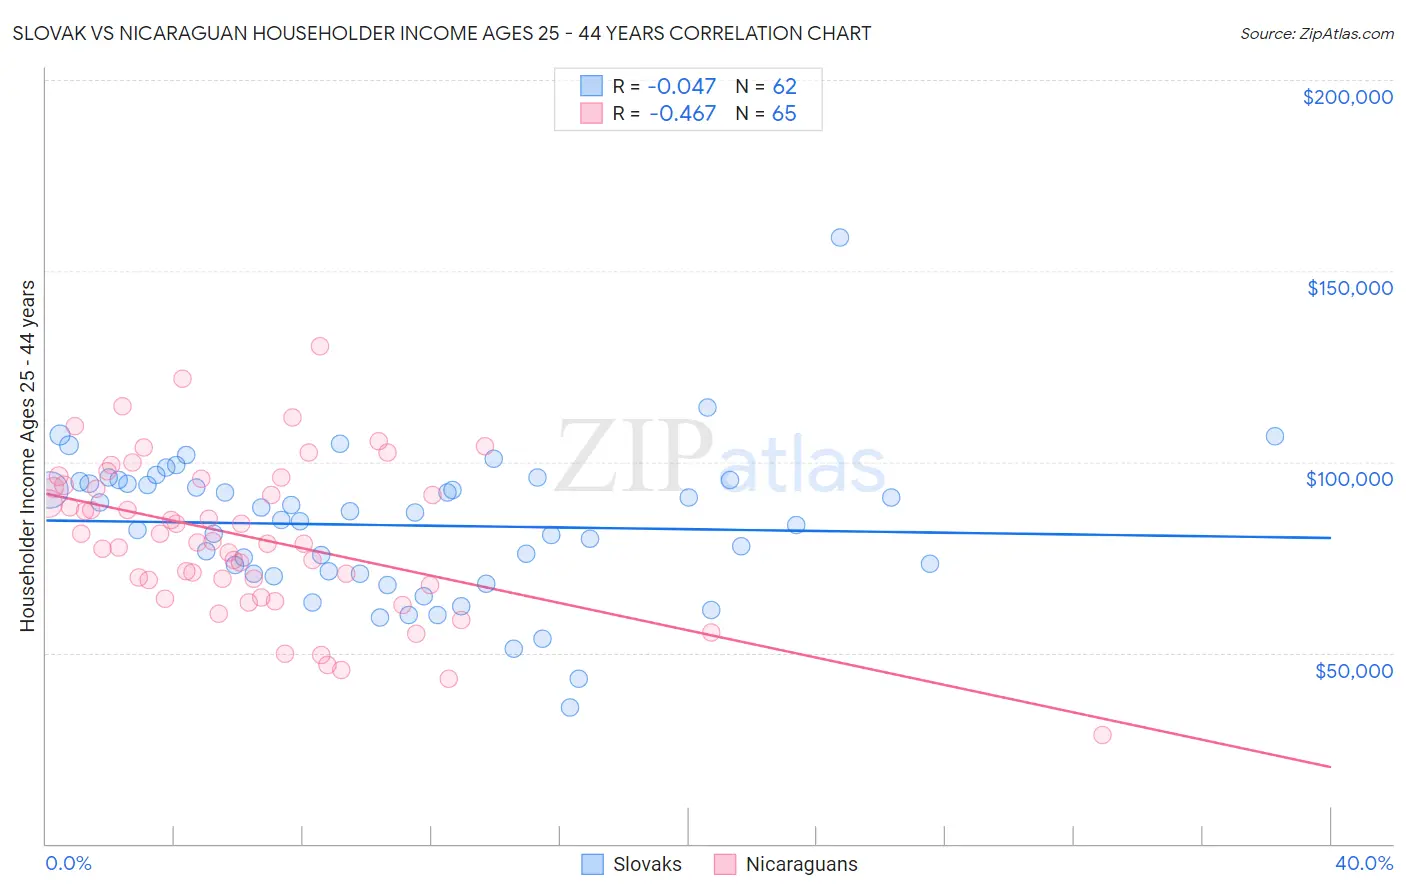 Slovak vs Nicaraguan Householder Income Ages 25 - 44 years